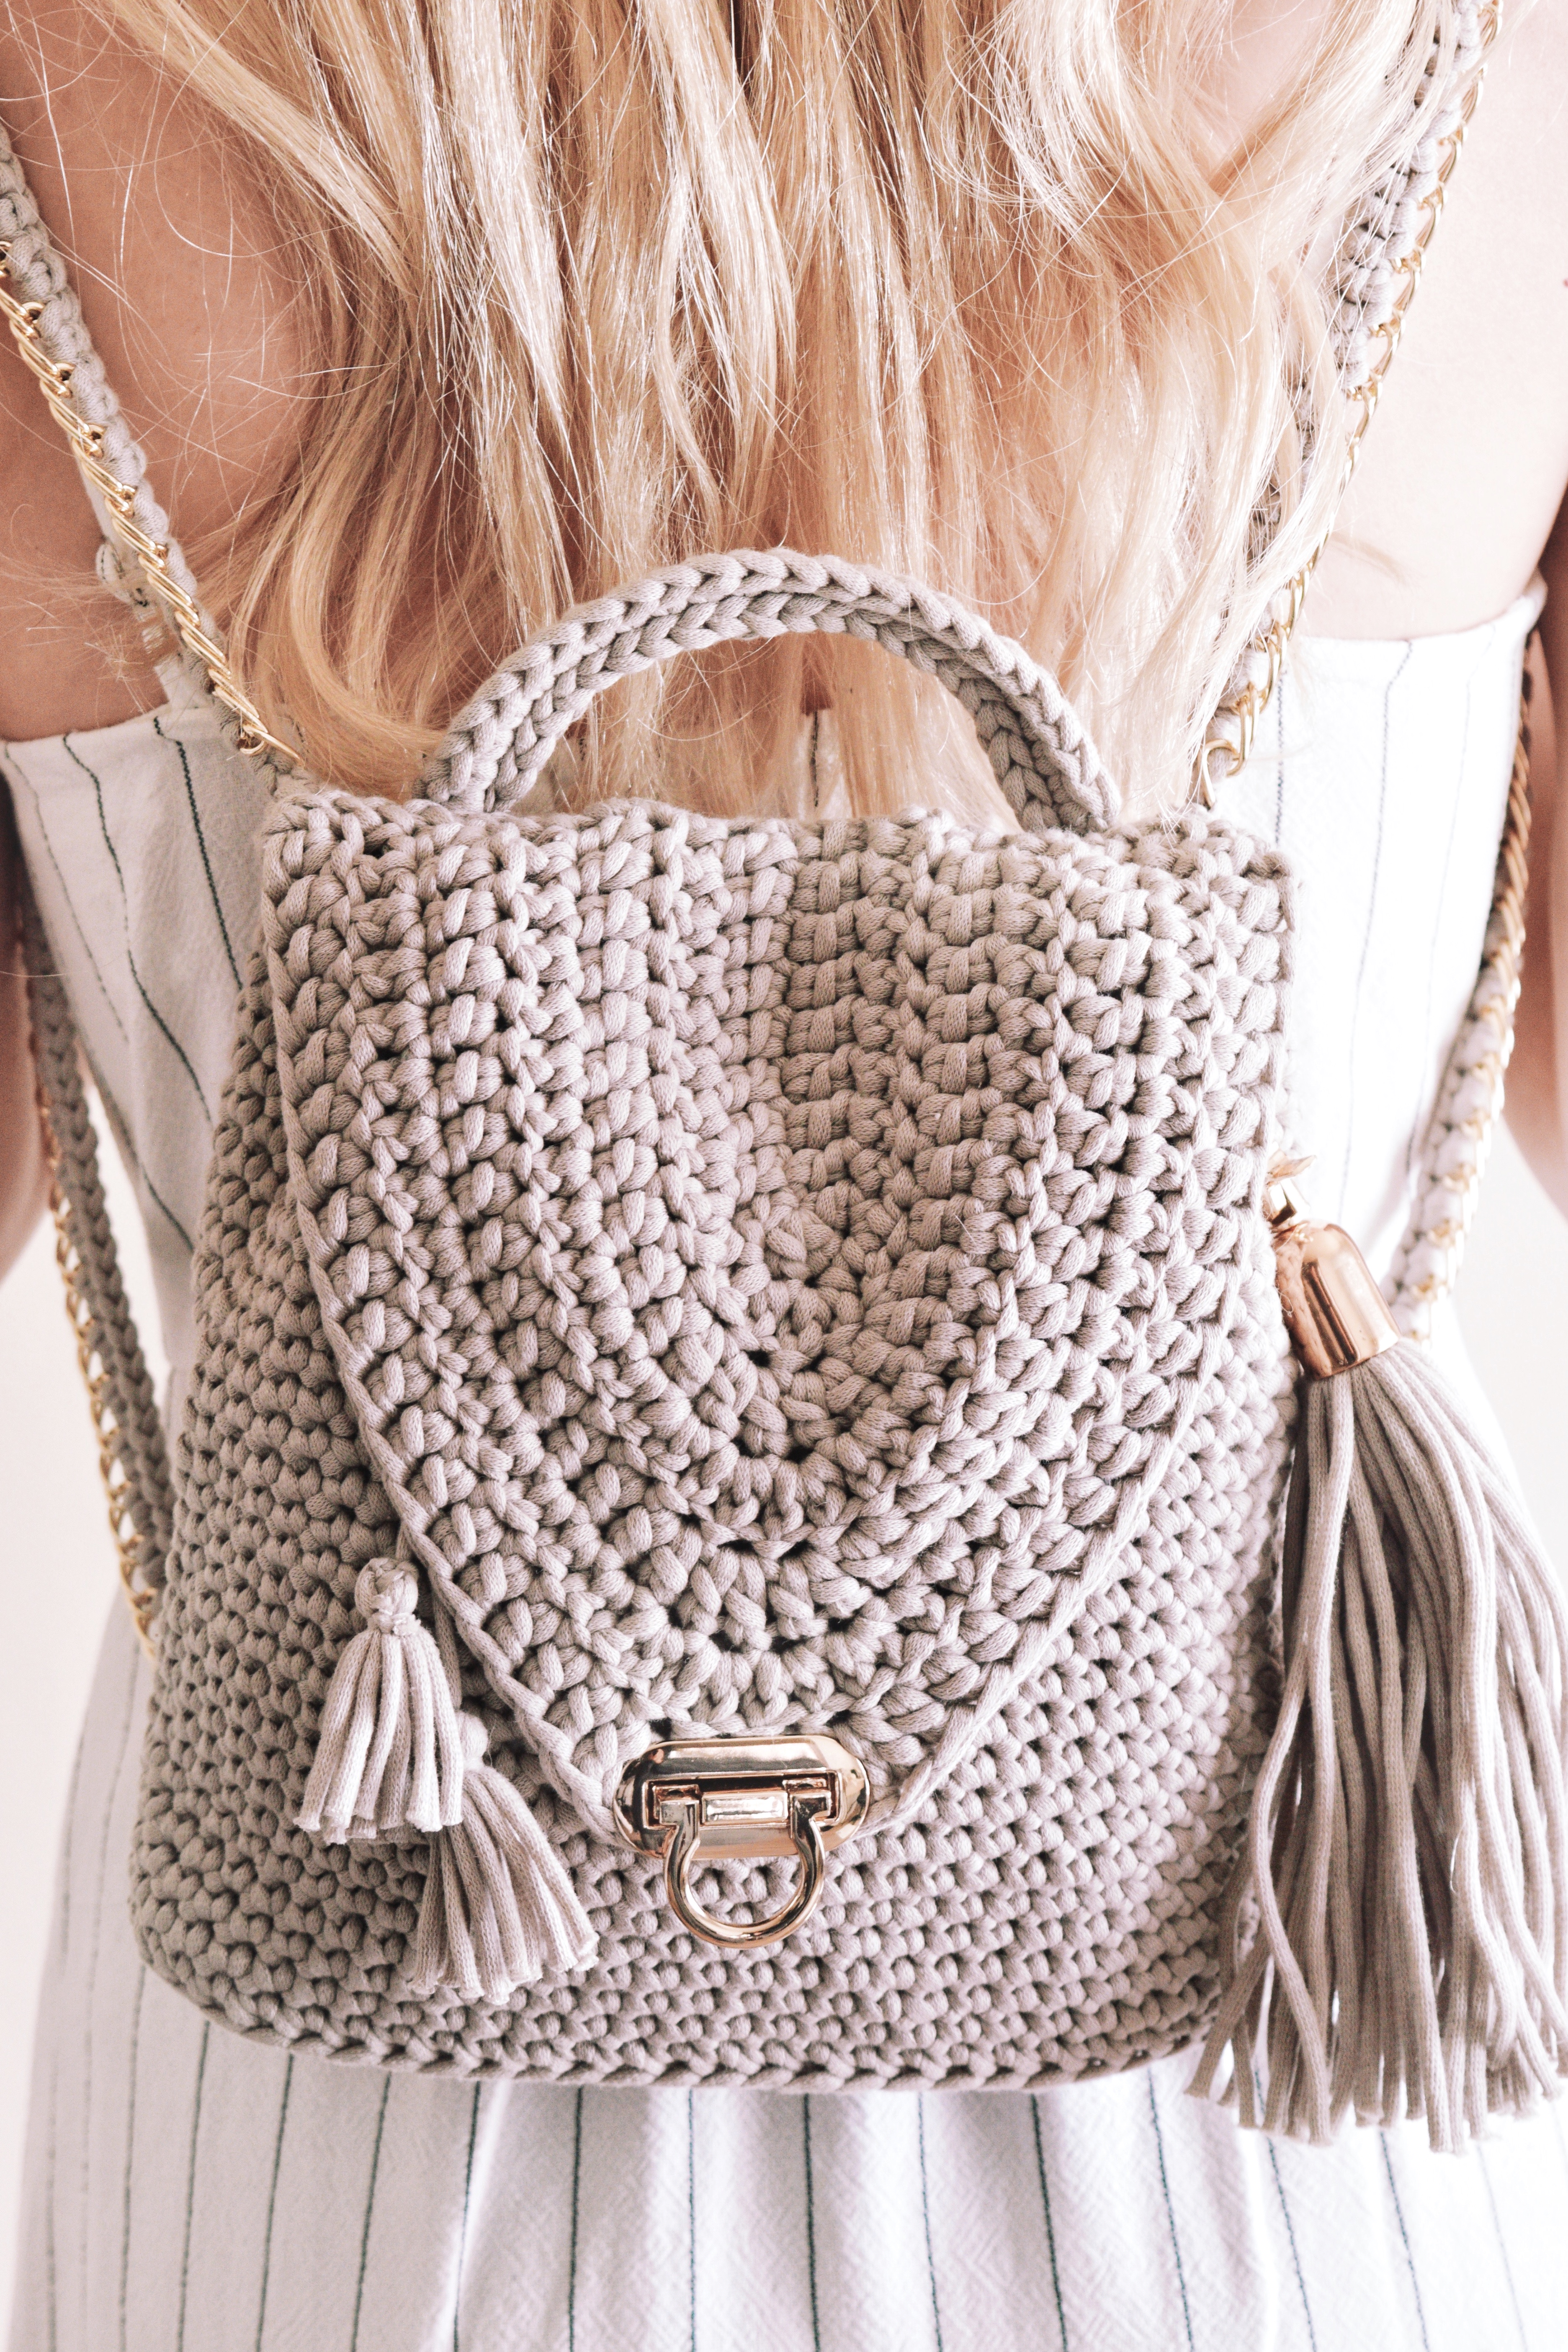 The Lola Bag Crochet Pattern ⨯ A Fashion Backpack Purse 